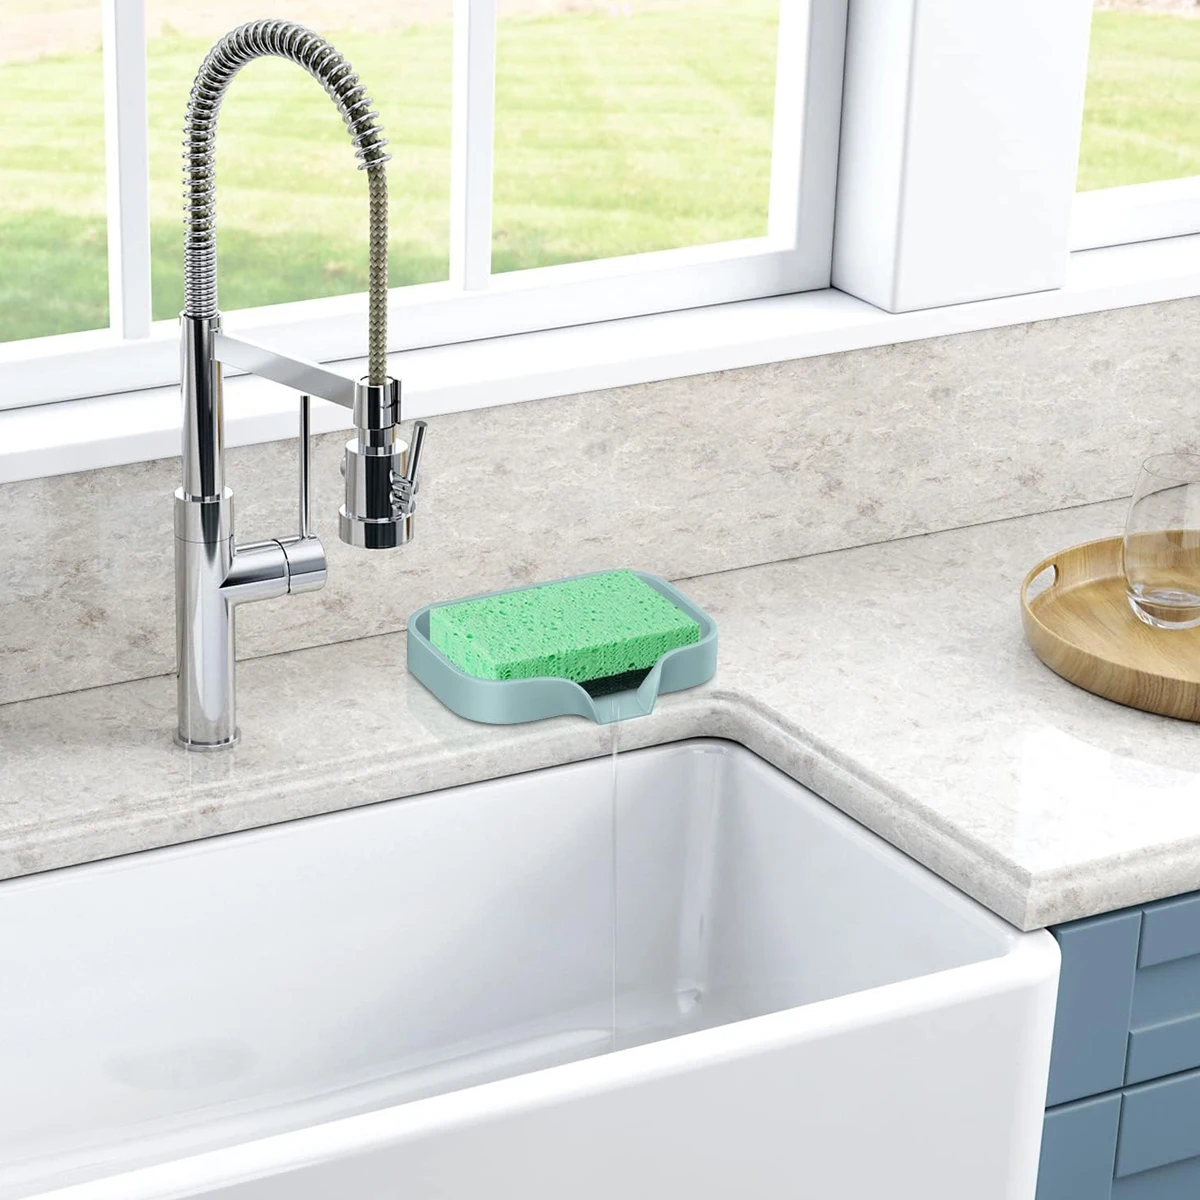 Kitchen Sink Soap Sponge Tray Self Draining Premium Silicone Soap Holder  for Bathroom Caddy Organizer for Dish Soap Bottle,Soap Dispenser